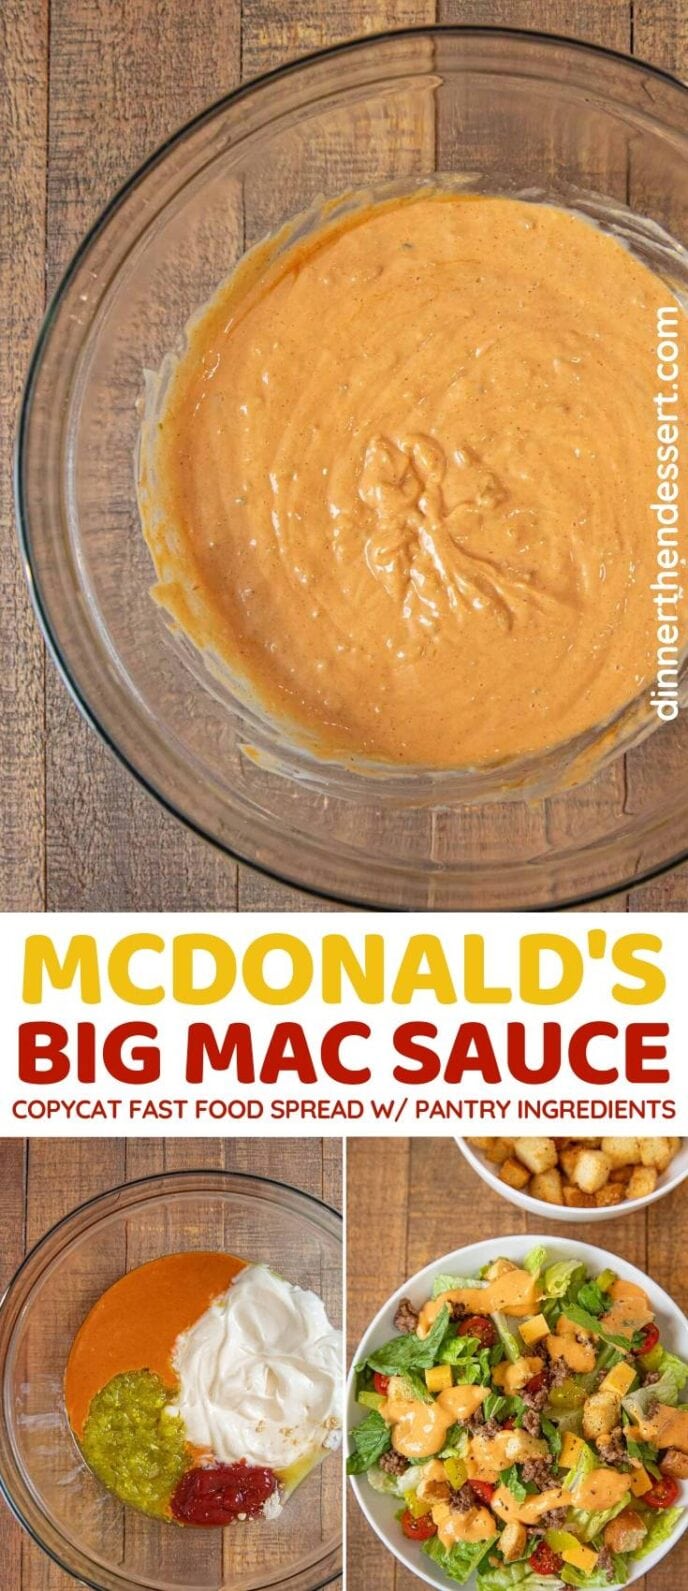 McDonald's Big Mac Sauce Copycat collage